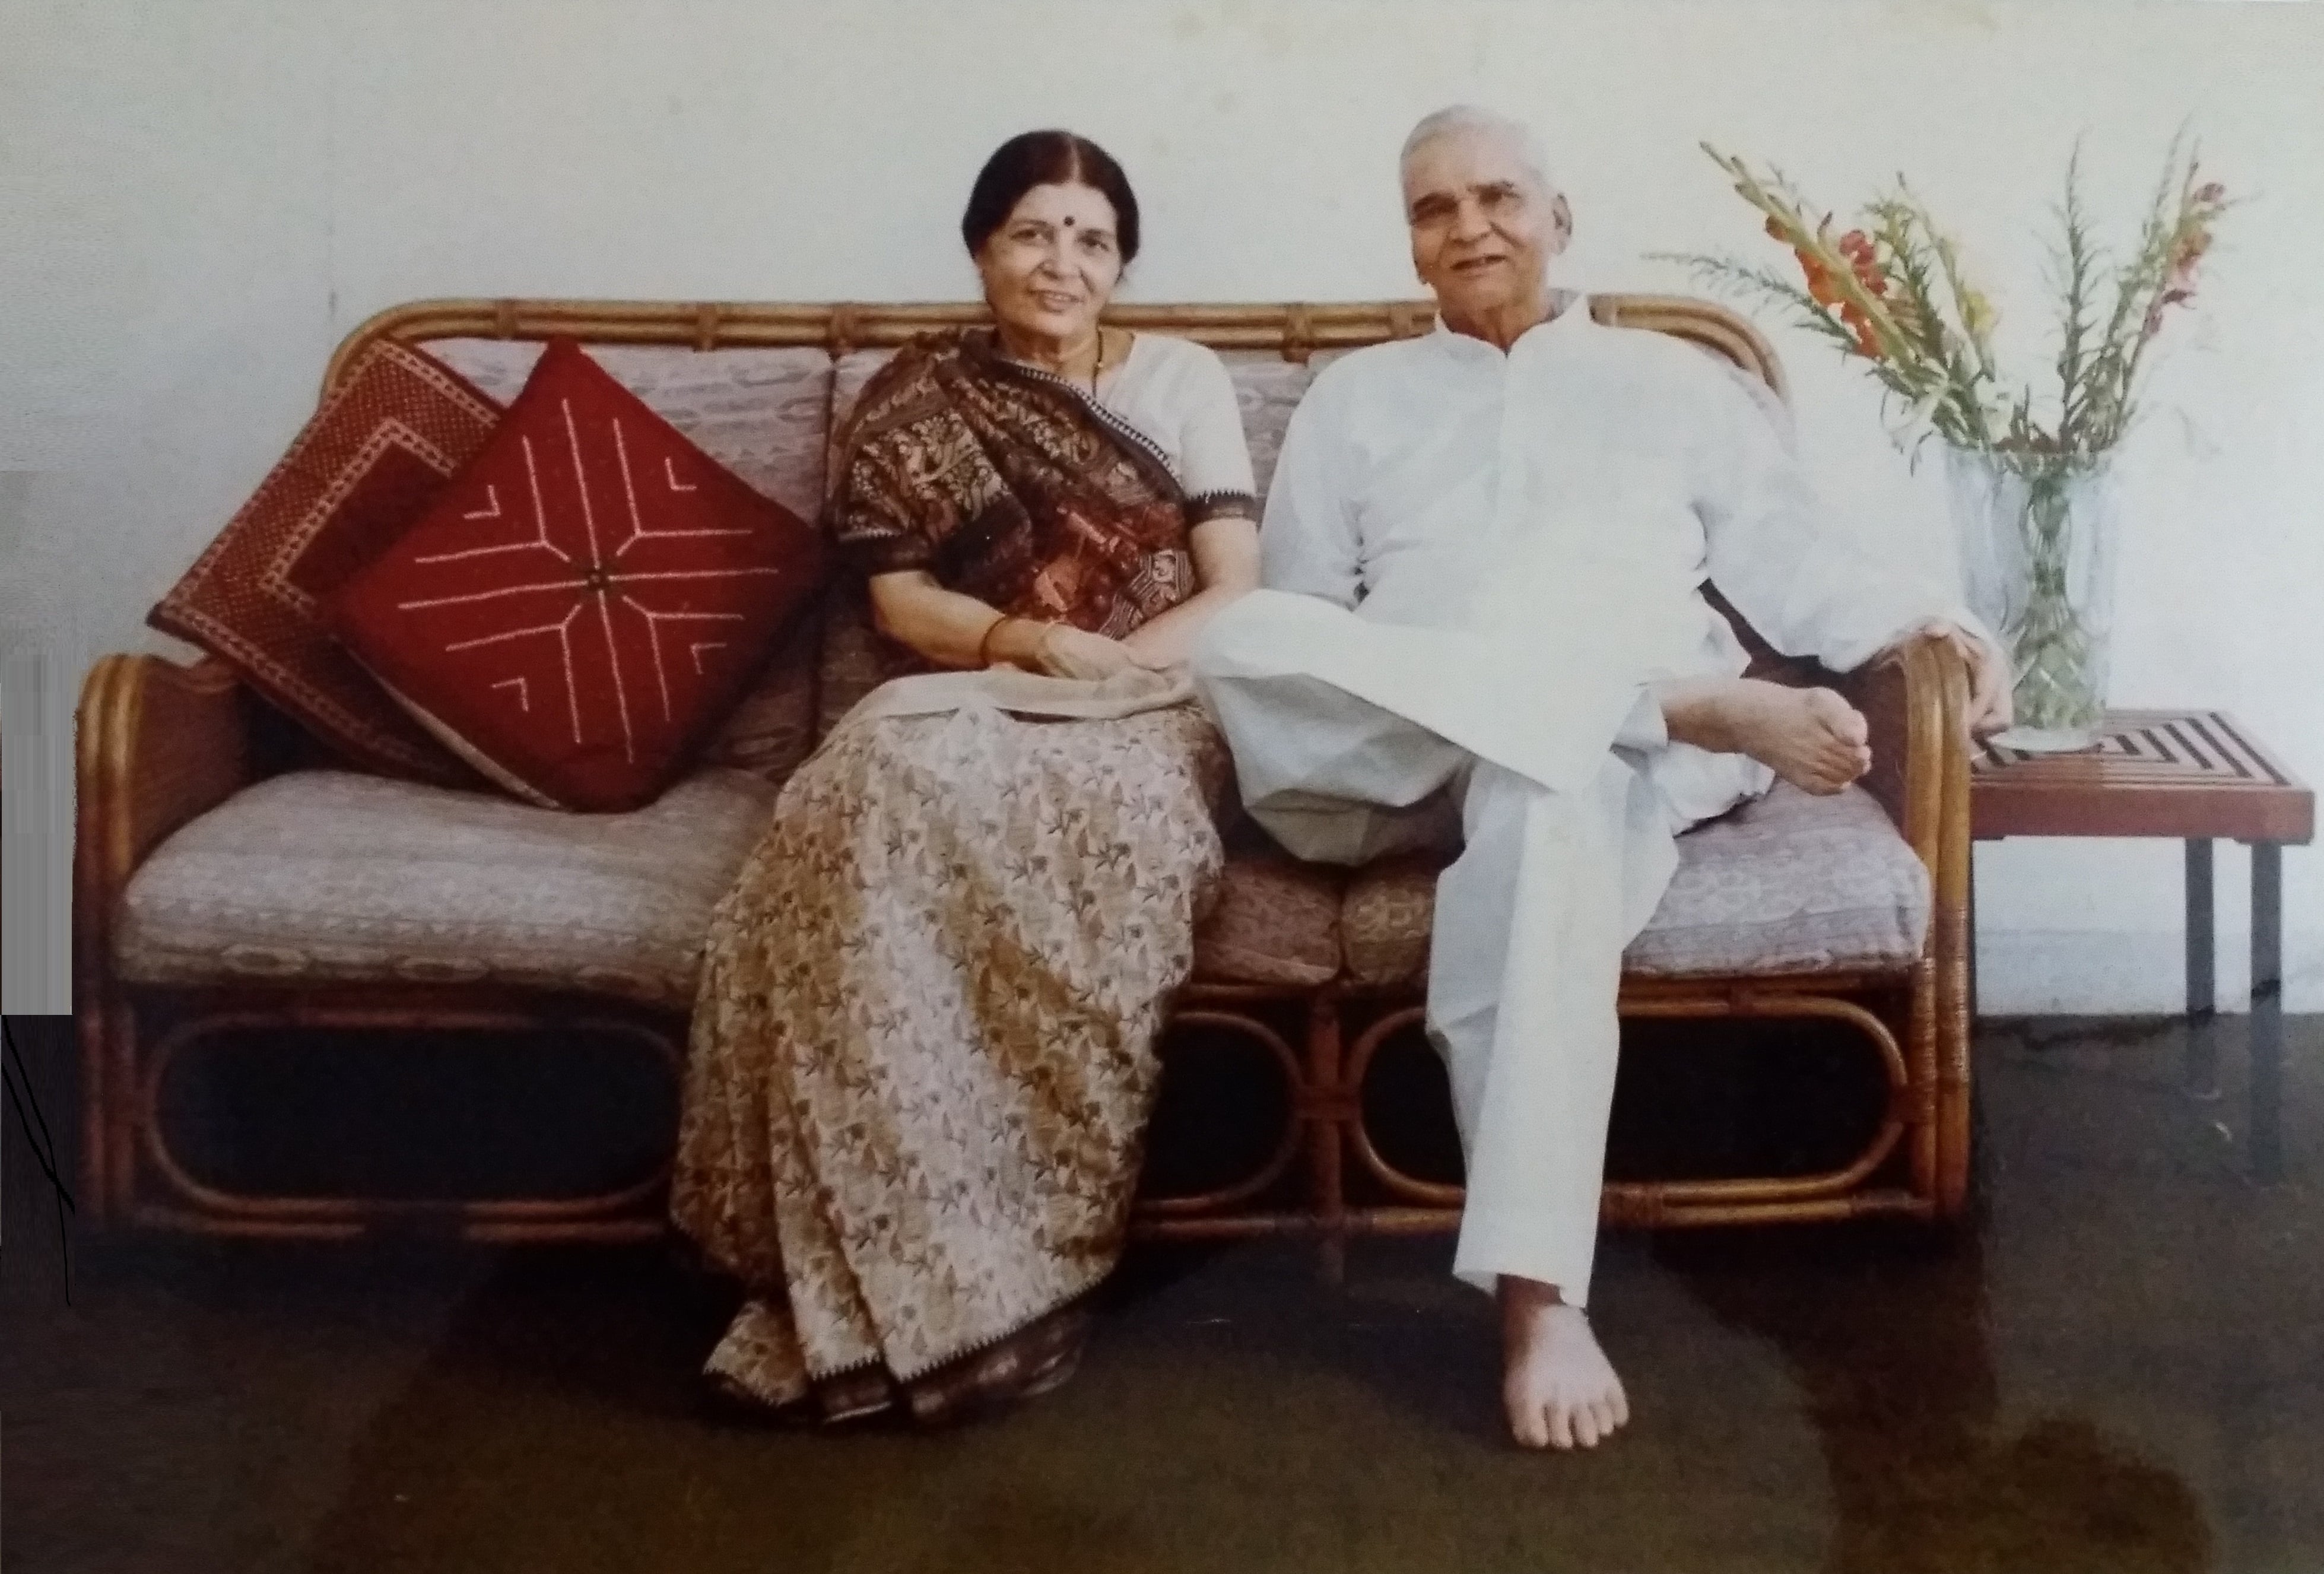 Vidyaben and Manubhai in 1992